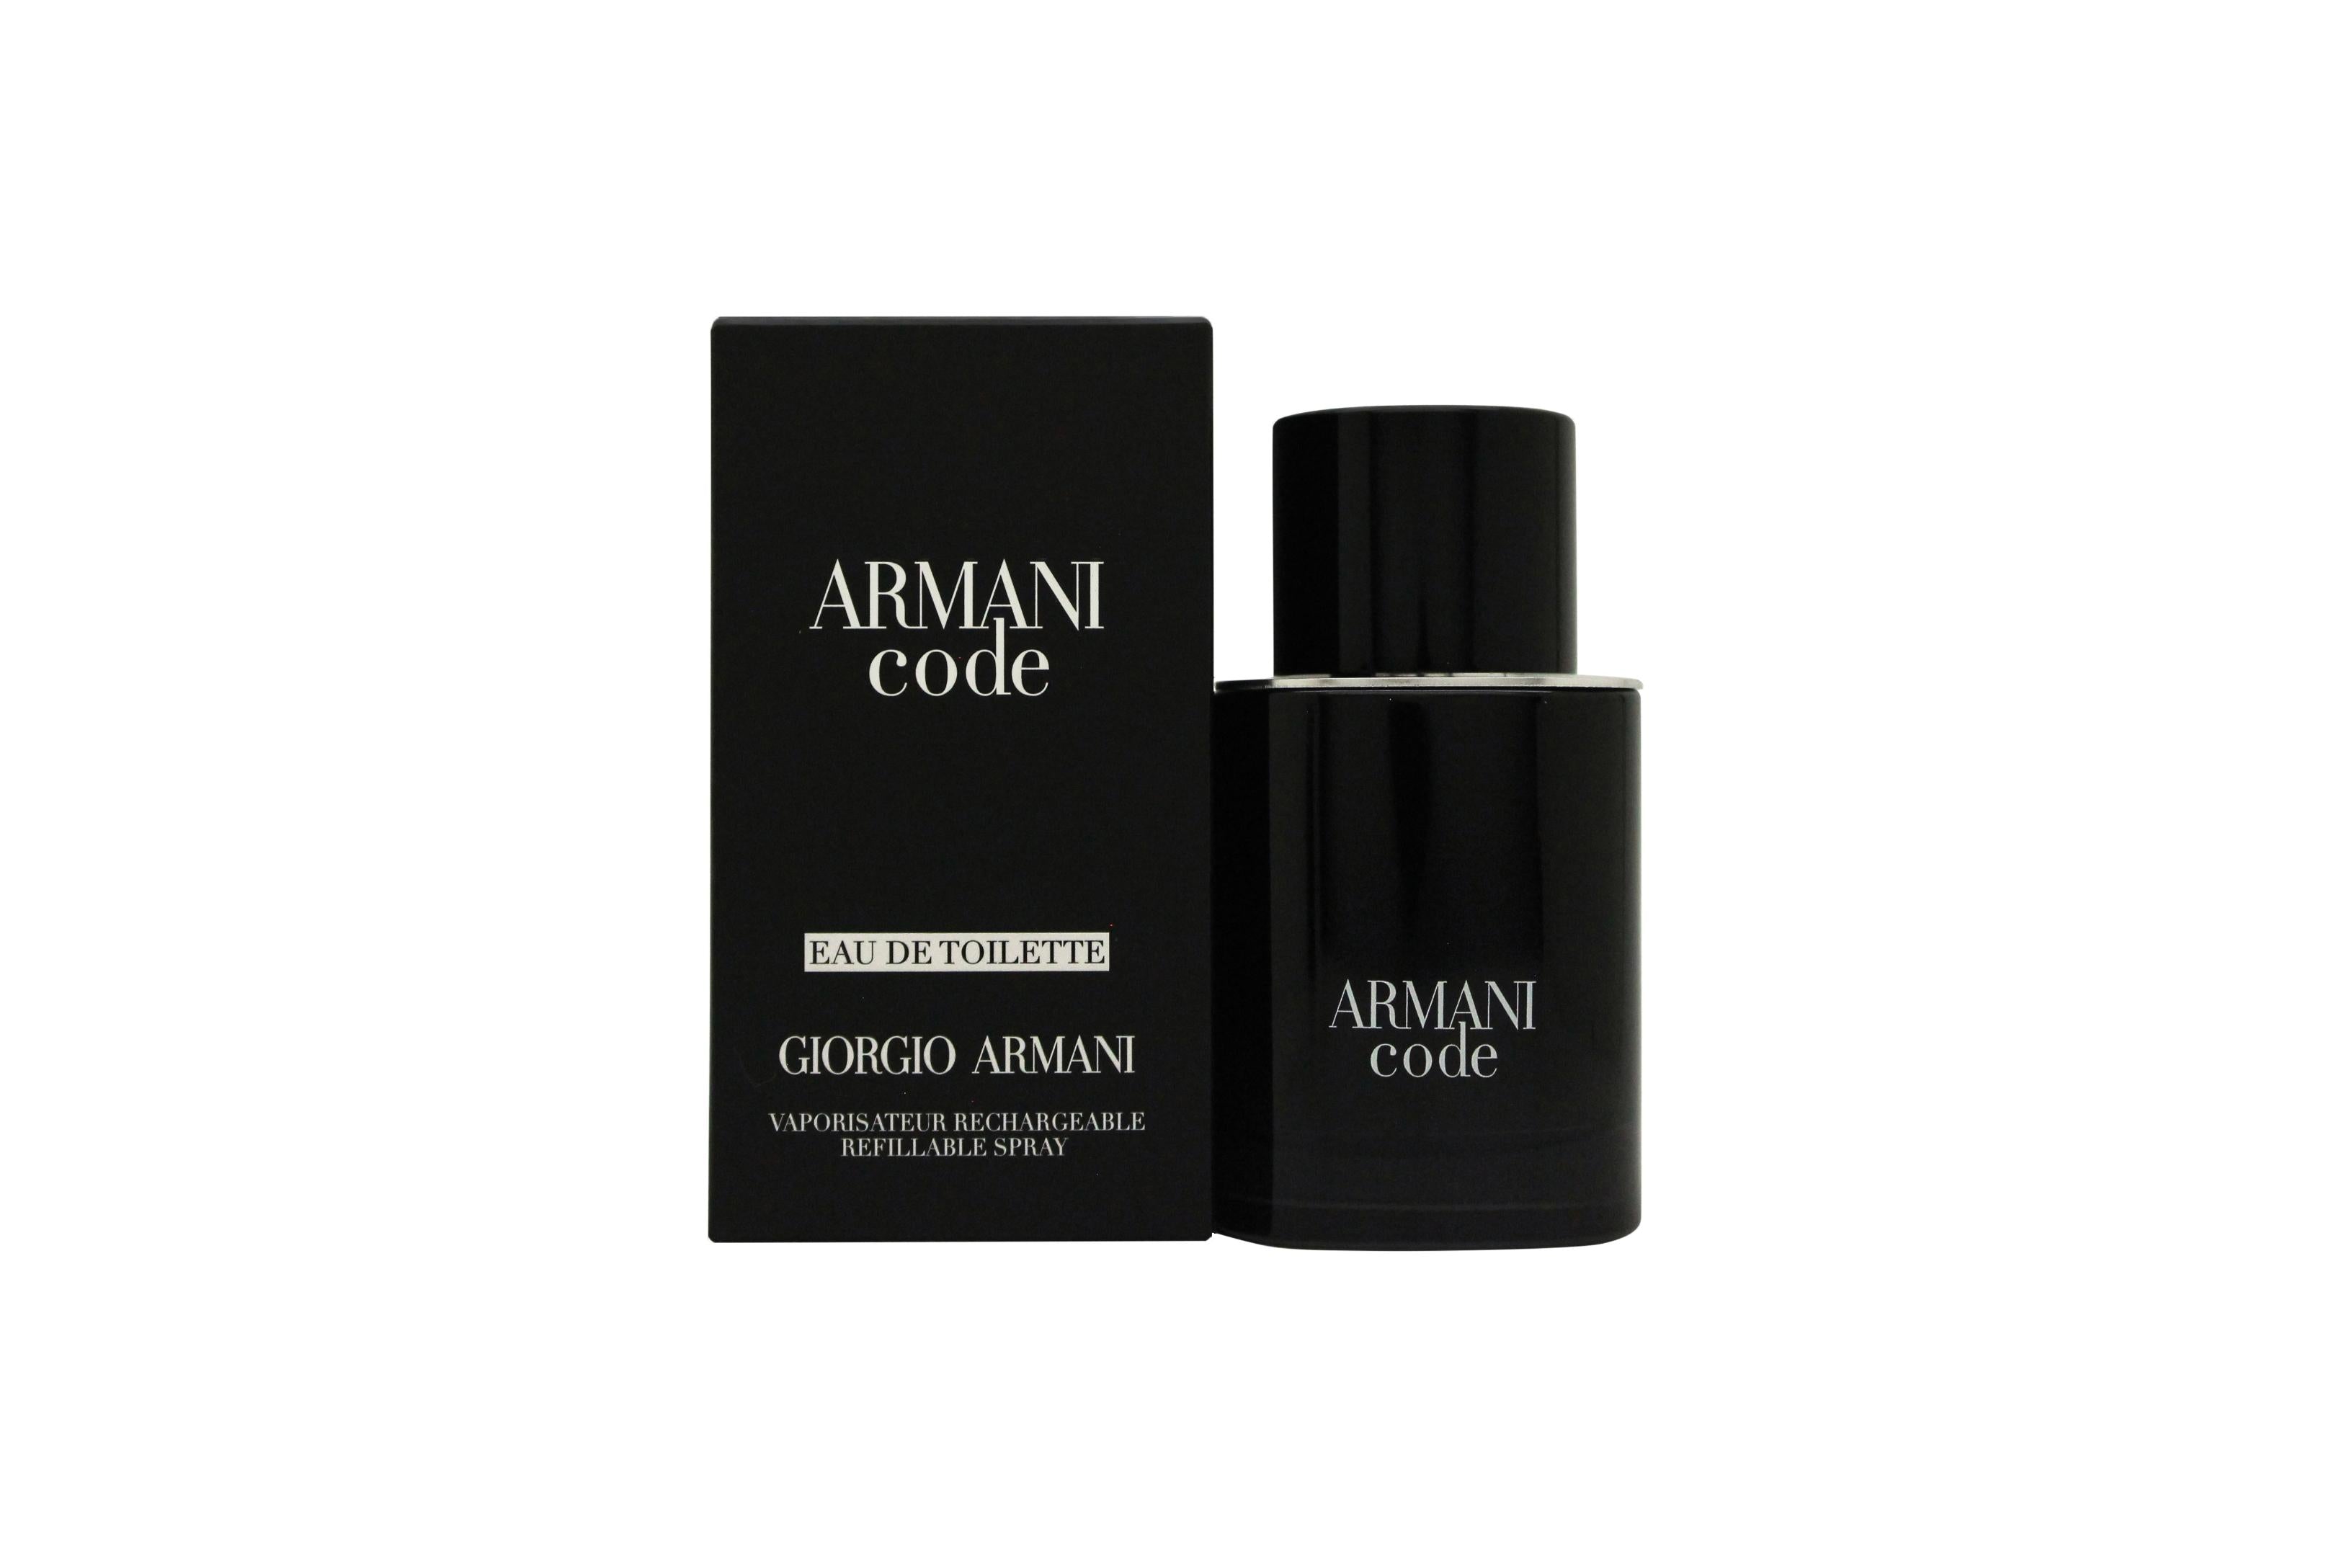 View Giorgio Armani Armani Code Eau de Toilette 50ml Refillable Spray information